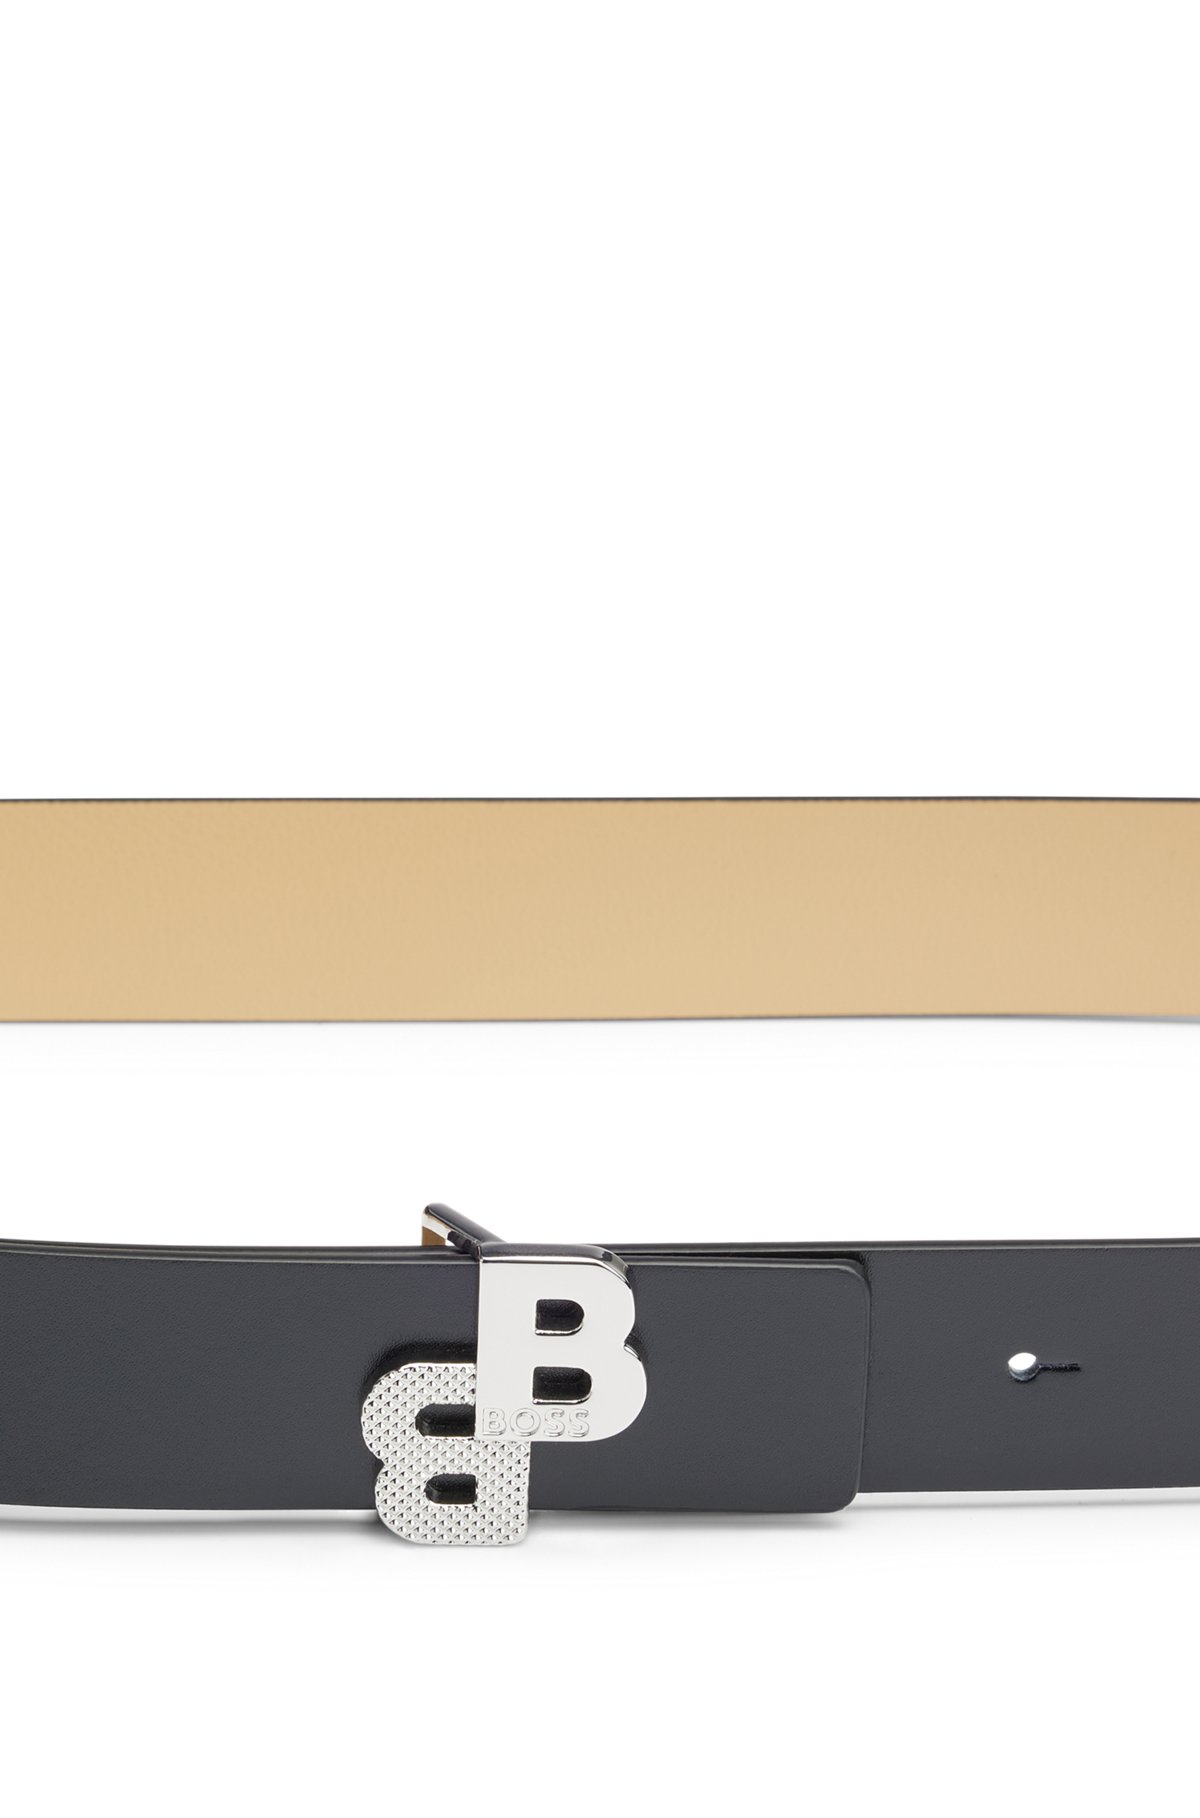 Reversible belt in Italian leather with monogram buckle, Black